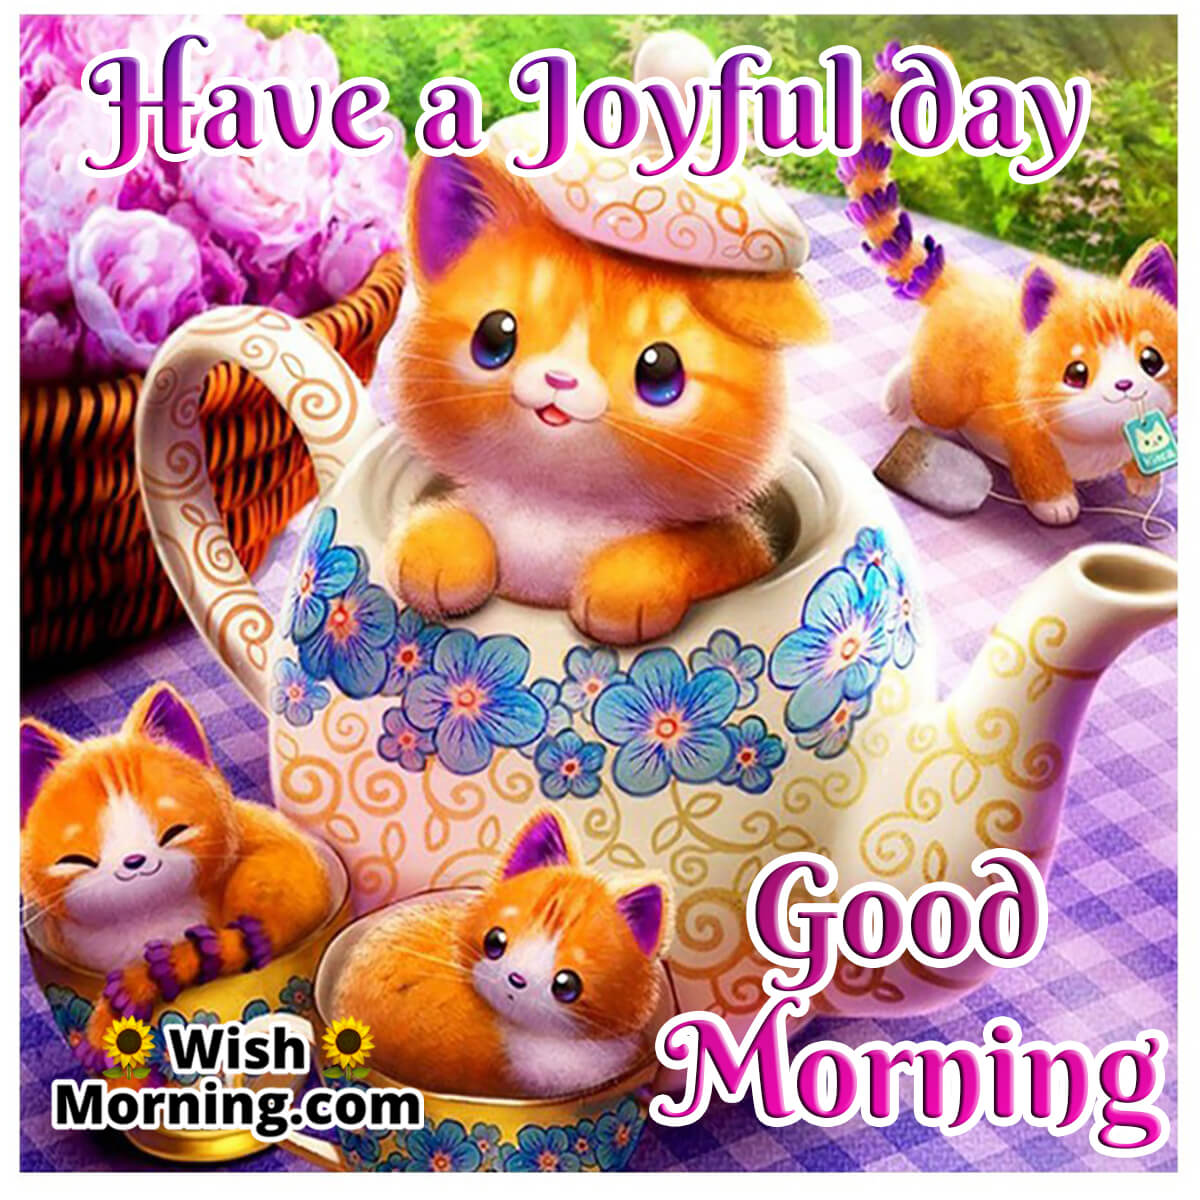 Good Morning Have A Joyful Day